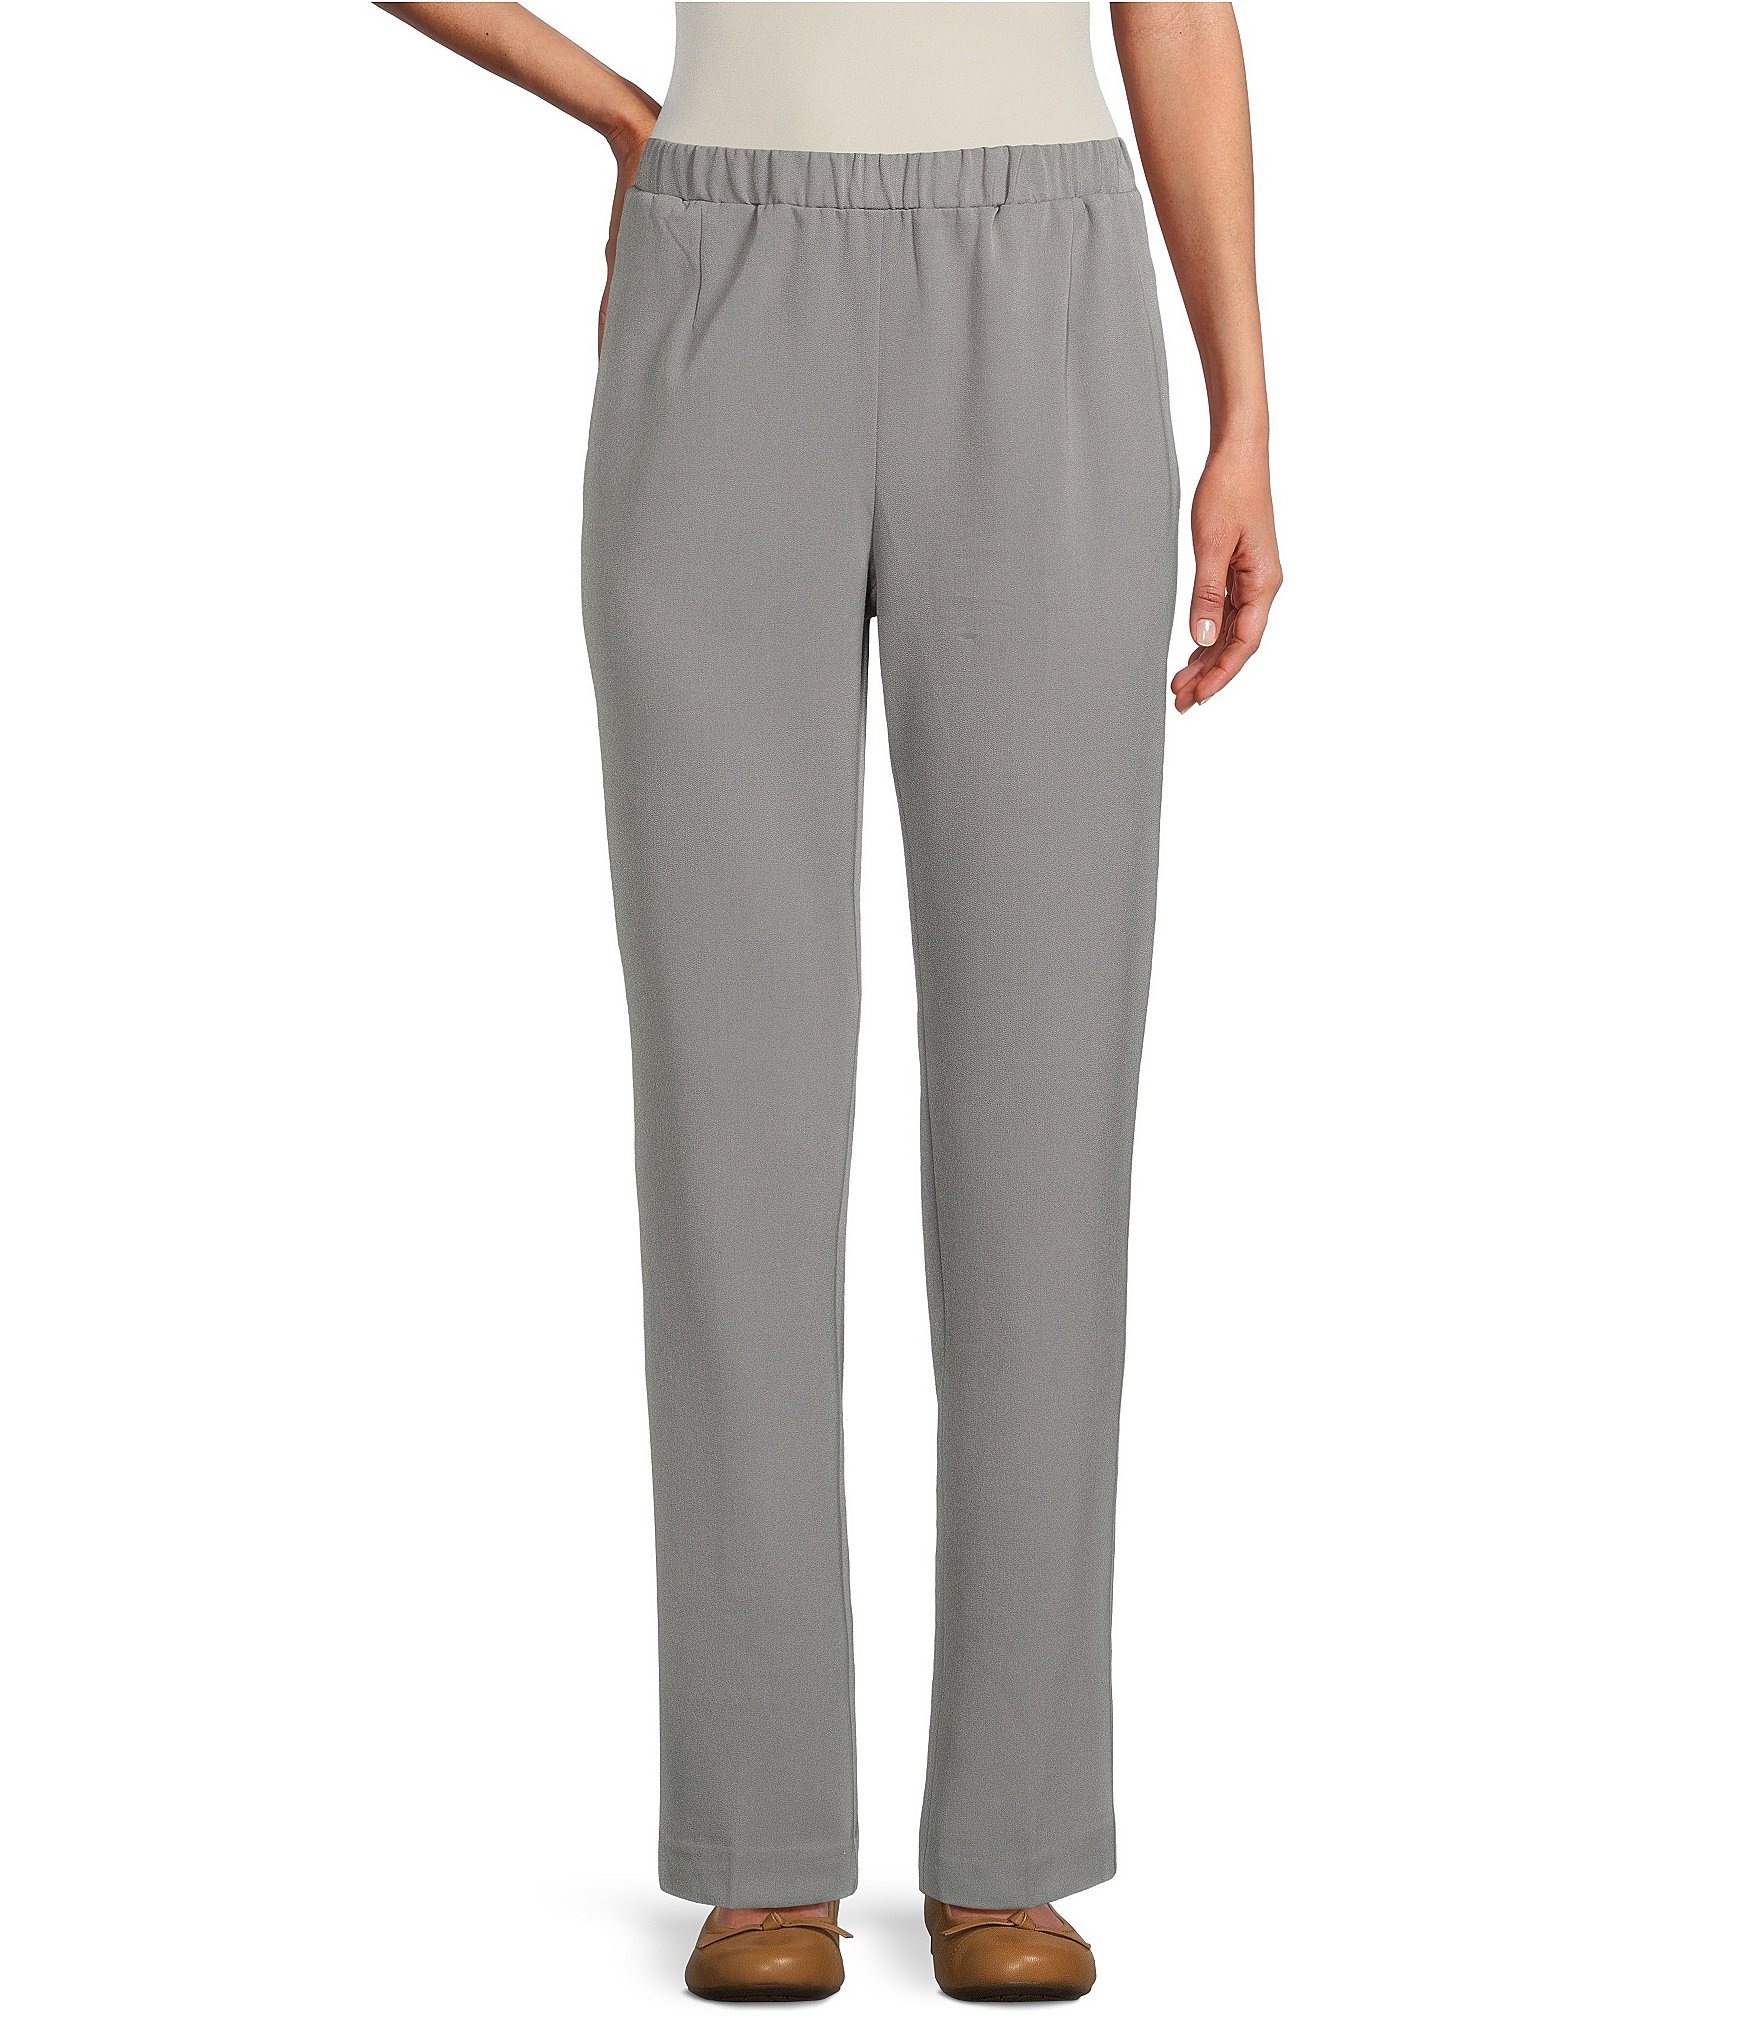 Women Lightweight Pocket Pants Solid Color Sweatpant Elastic Waistband  Straight Cotton Pants 